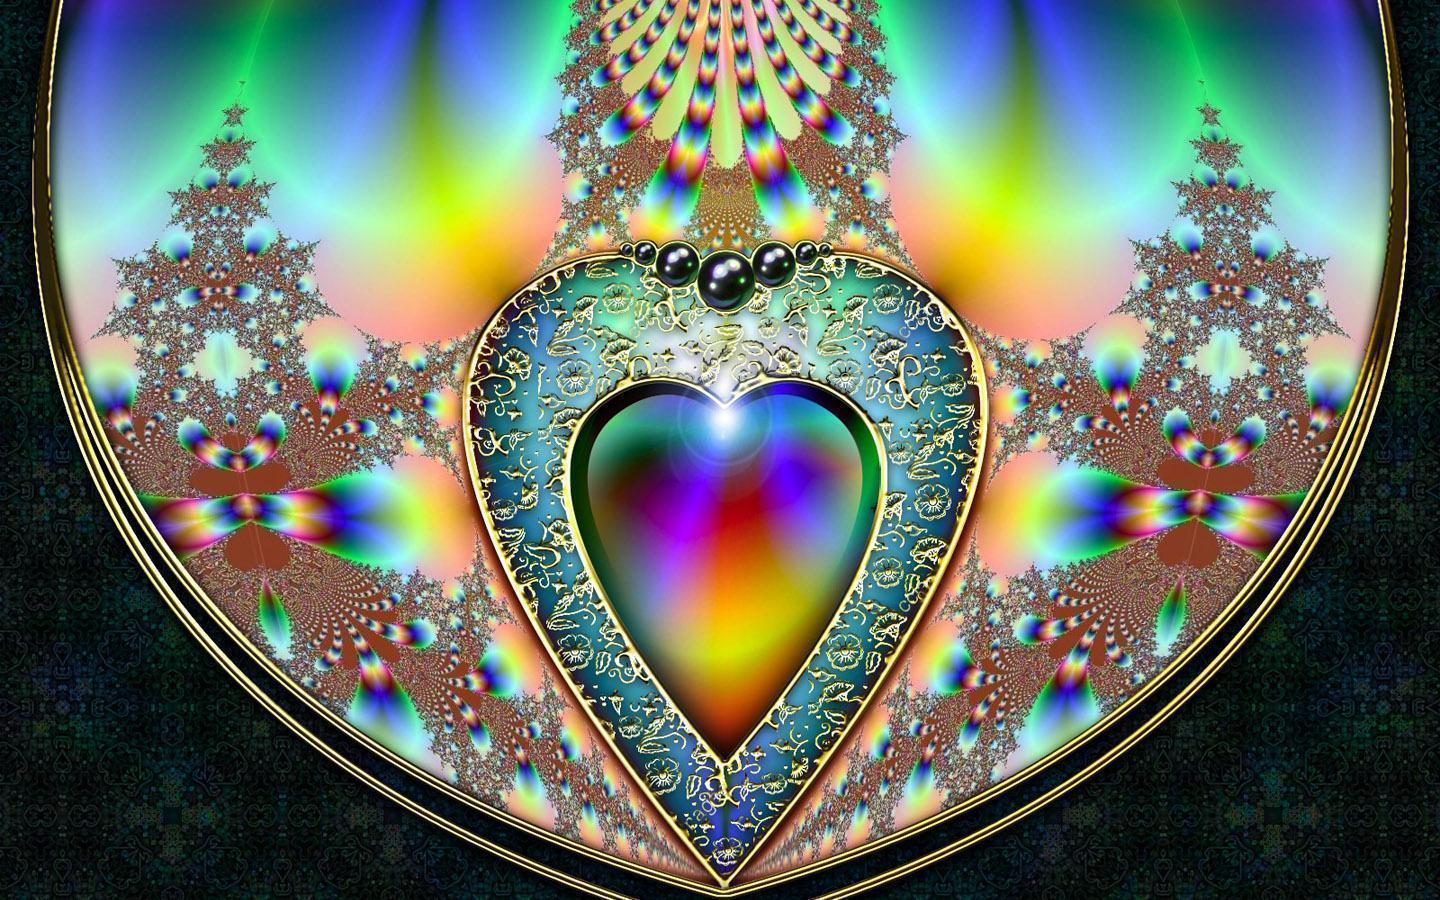 Colorful heart free desktop background wallpaper image